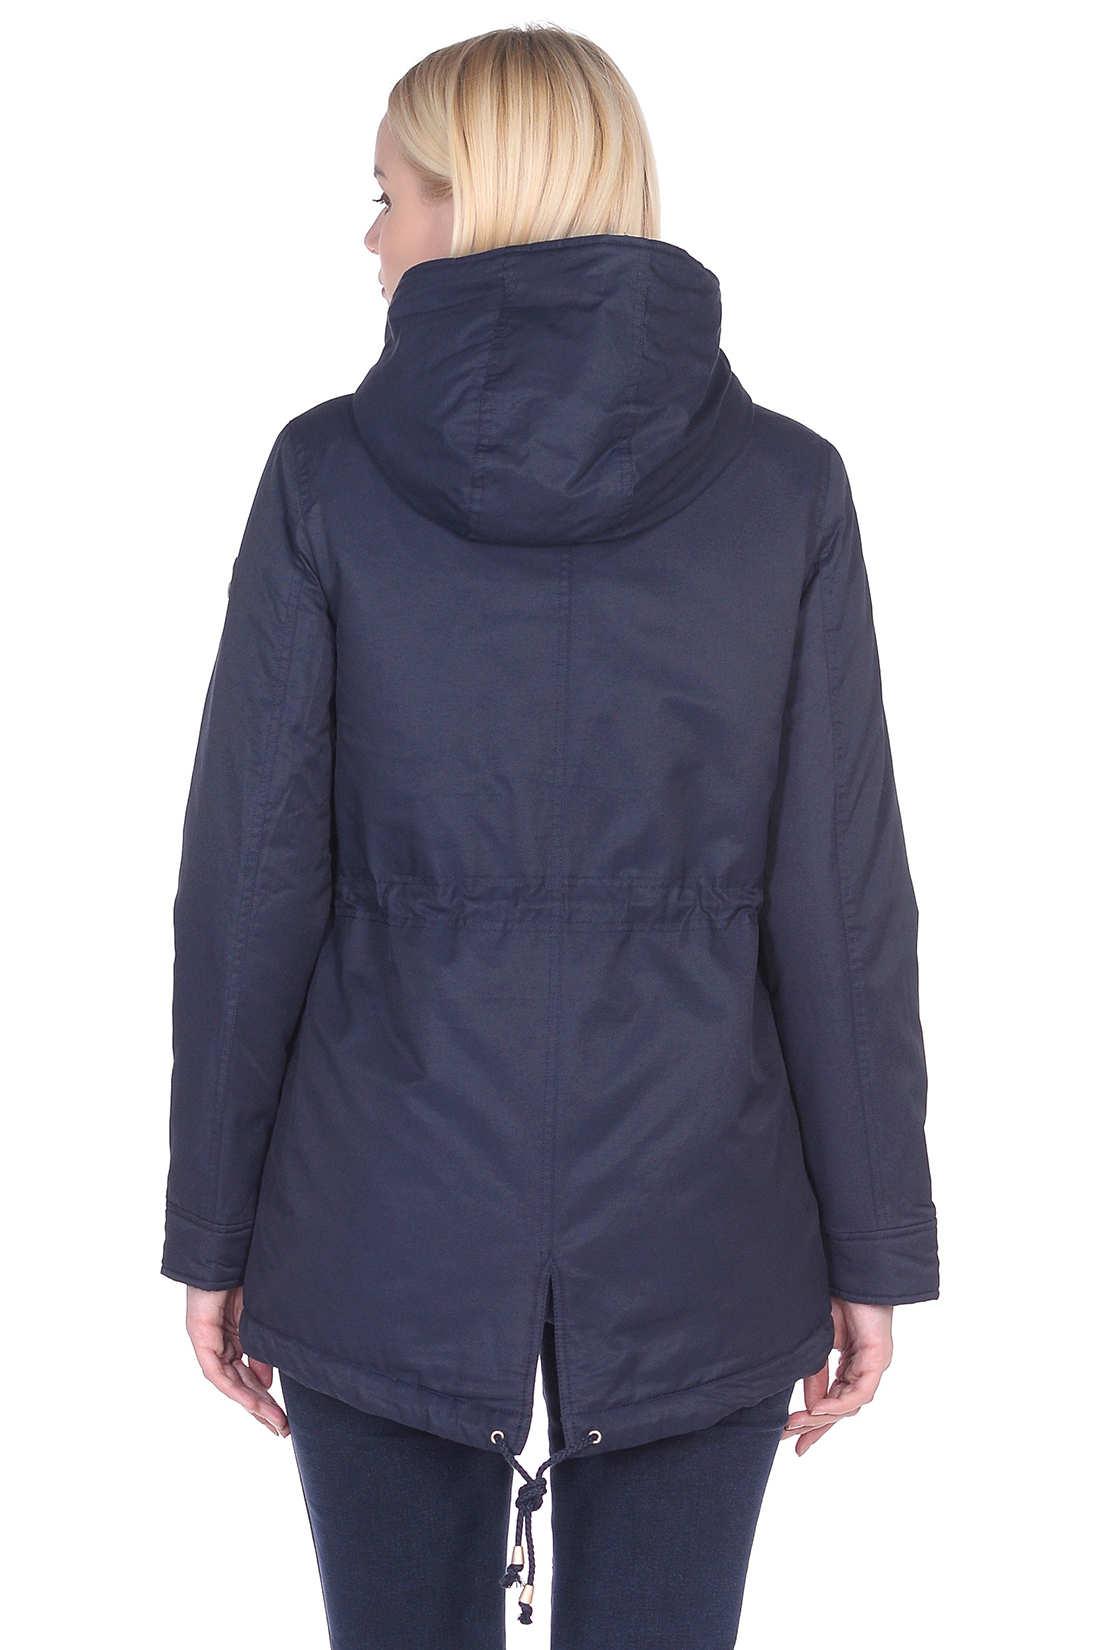 Куртка-парка с вышивкой (арт. baon B039004), размер XXL, цвет синий Куртка-парка с вышивкой (арт. baon B039004) - фото 2